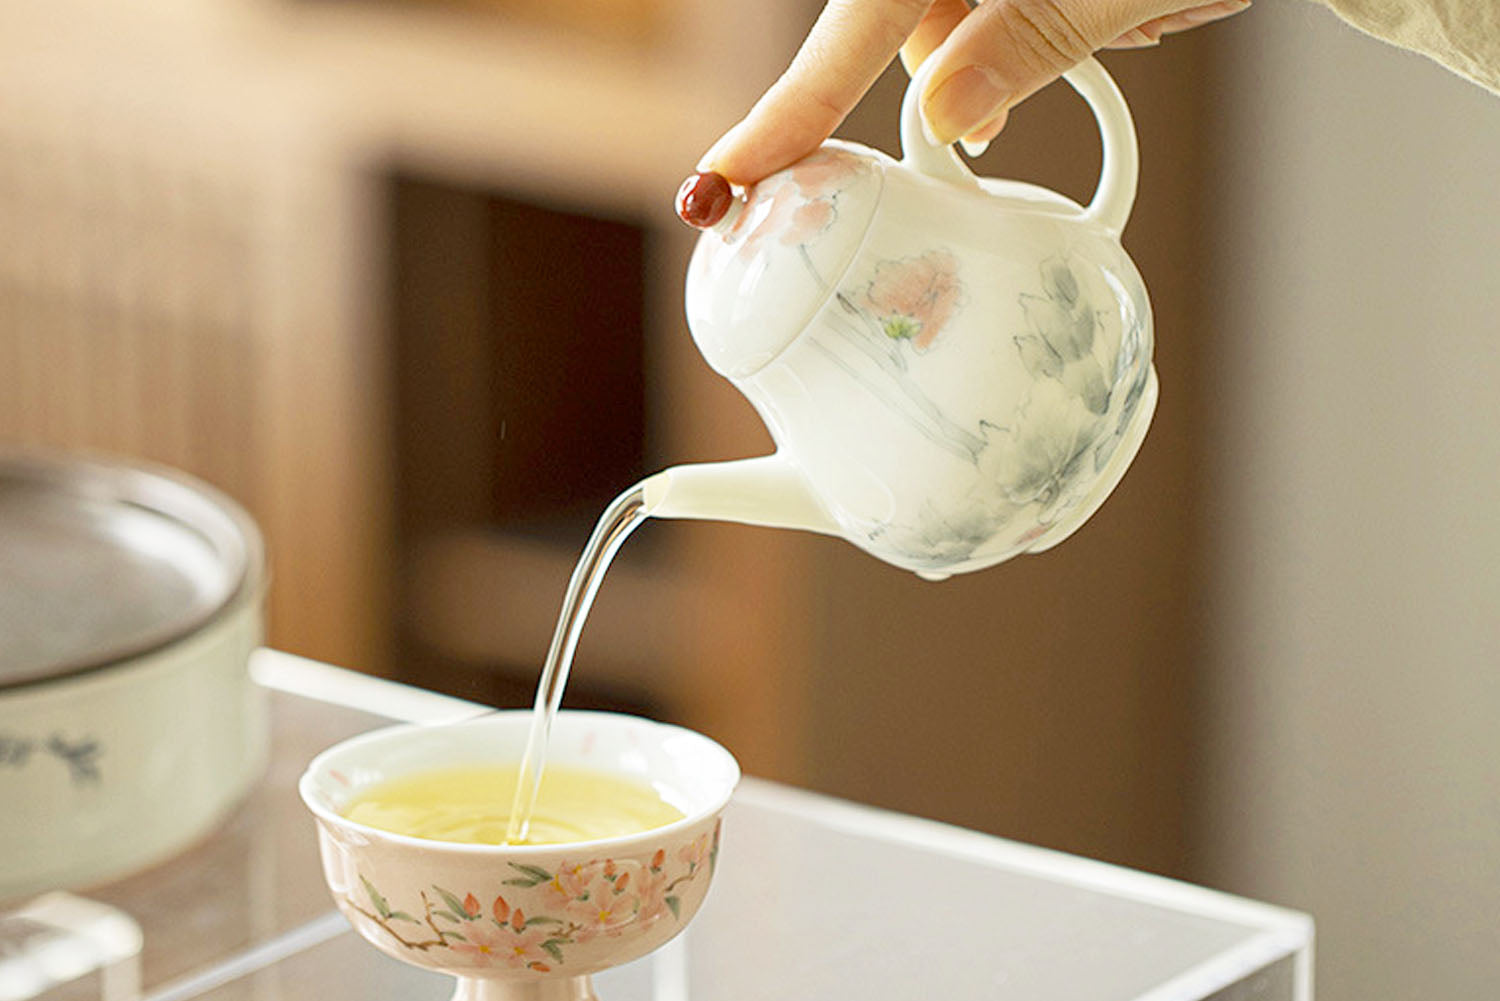 Teapot with Lotus Flower Pattern